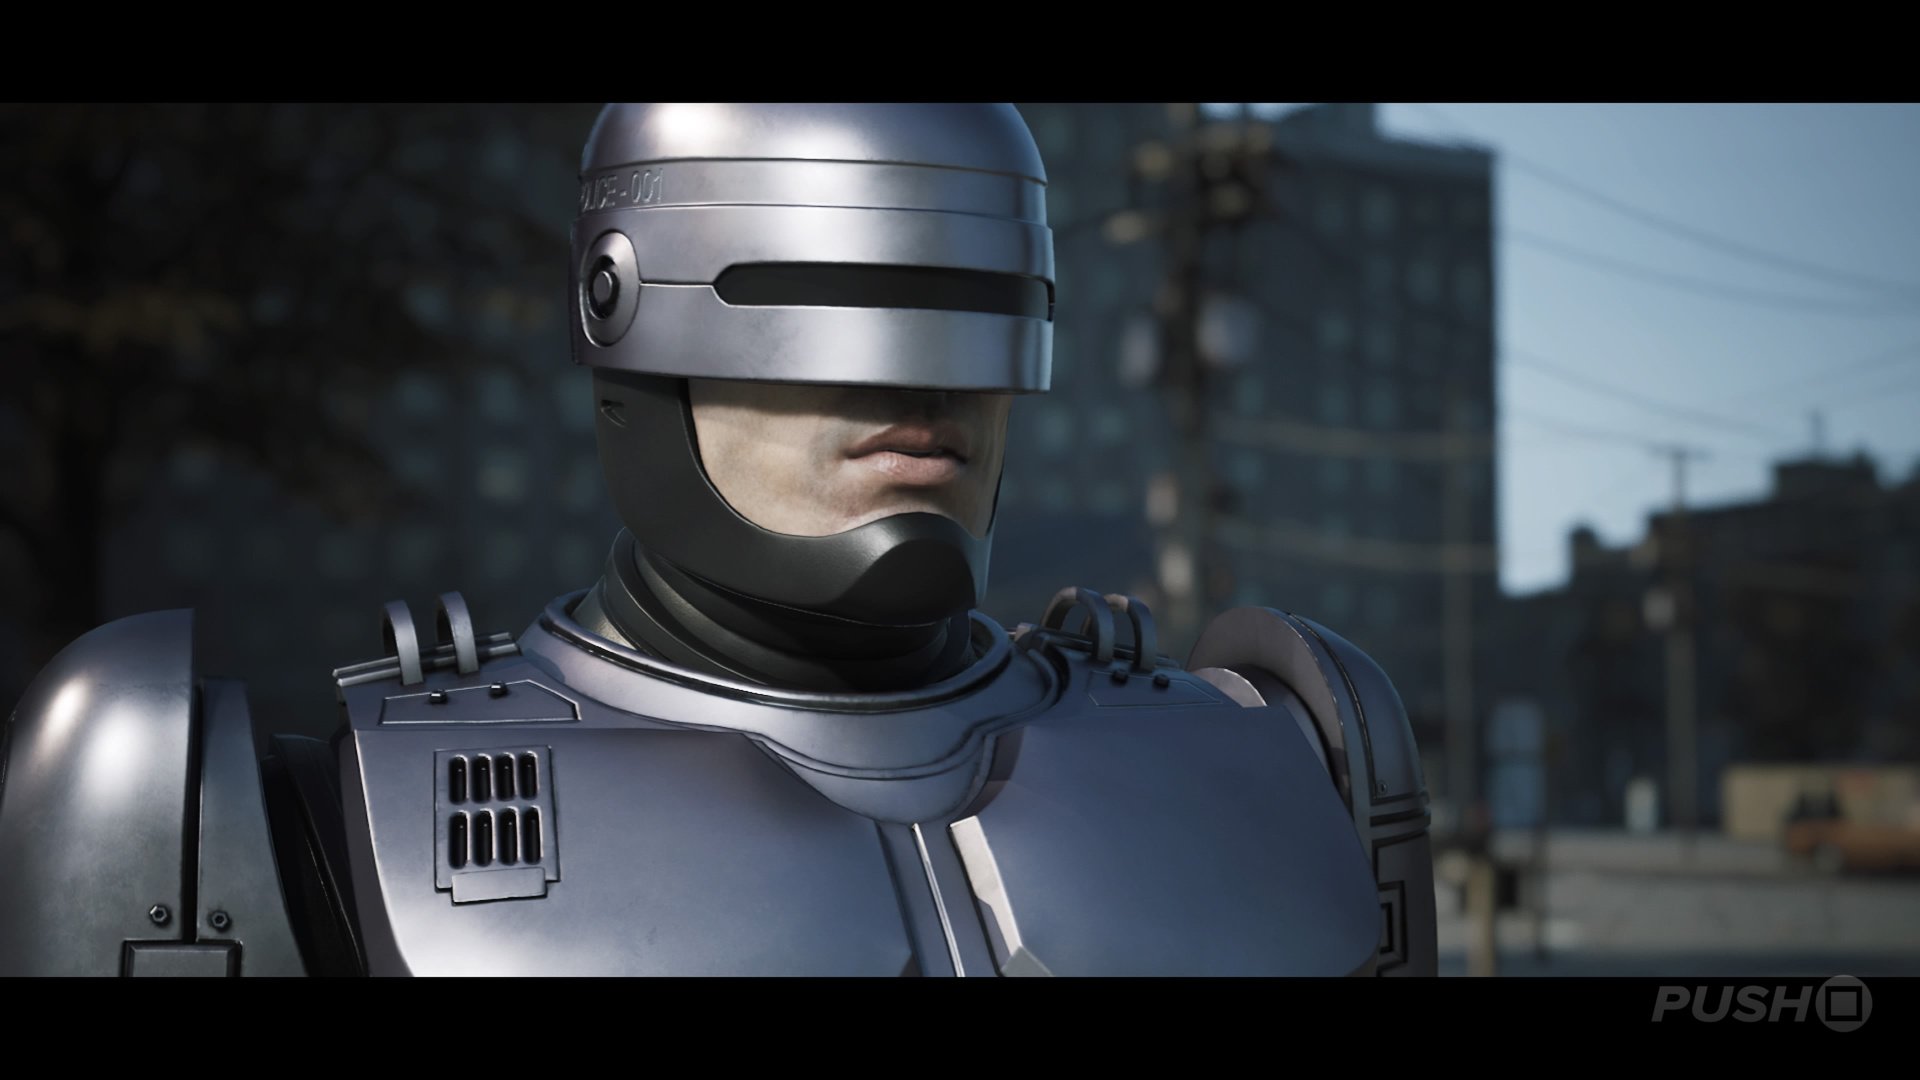 RoboCop: Rogue City Hands-On Preview - IGN